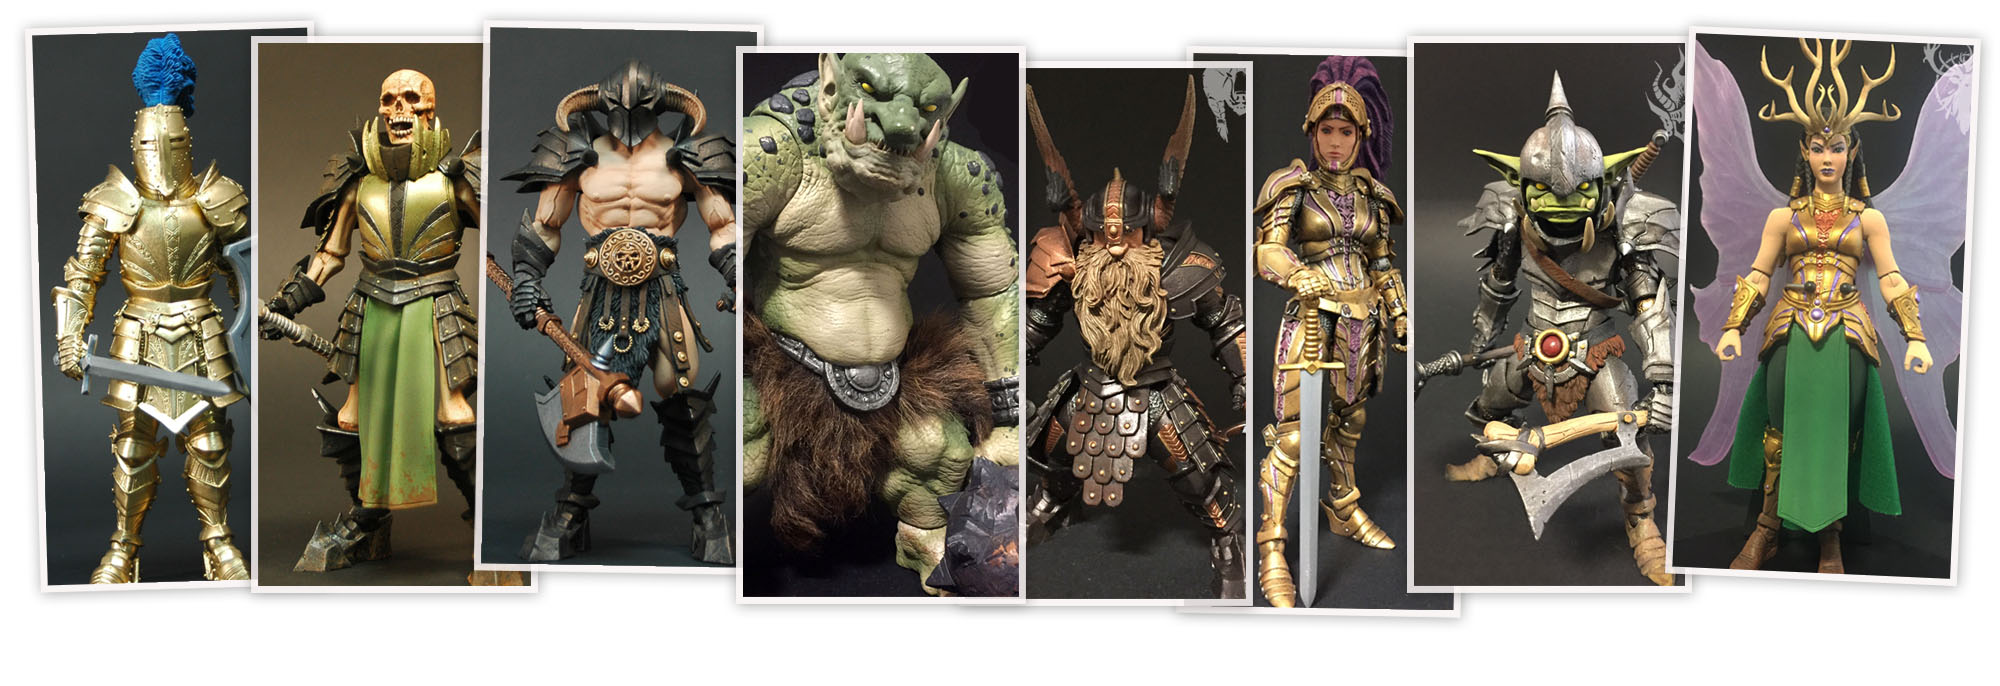 Mythic Legions figures by Four Horsemen Studios